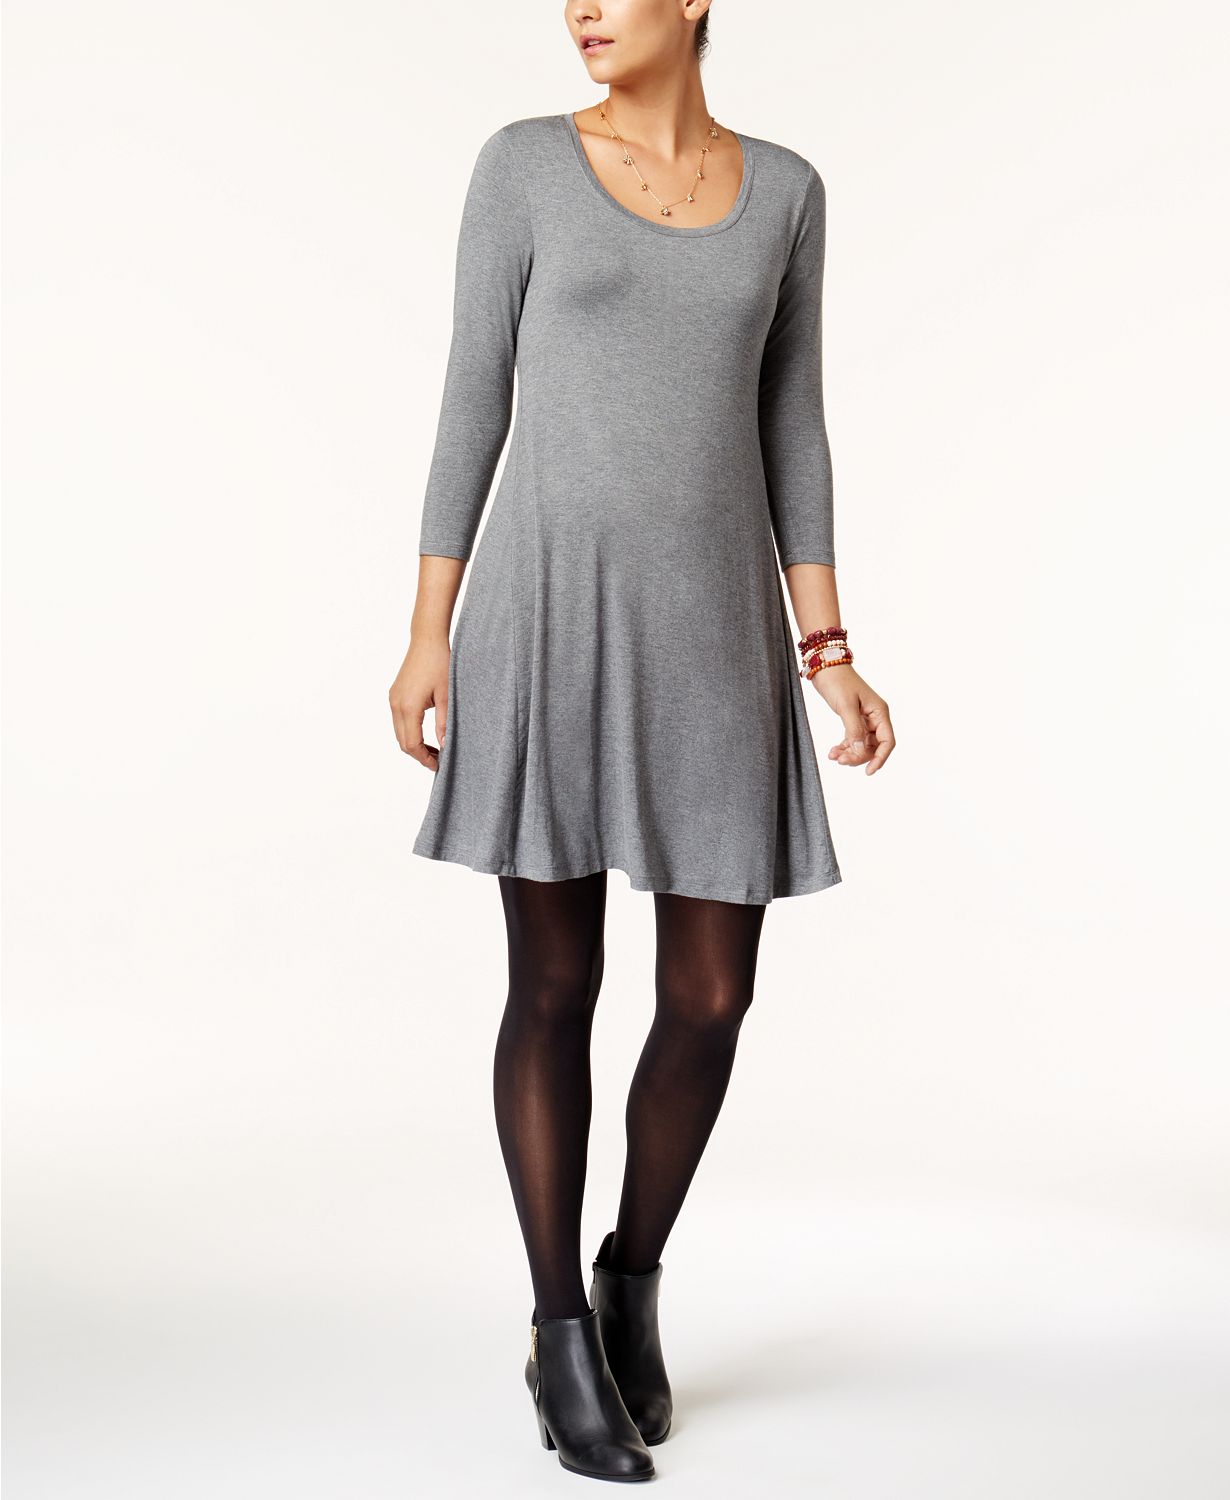 Style Co Three-Quarter-Sleeve Shift Dress Mid Heather Grey XS